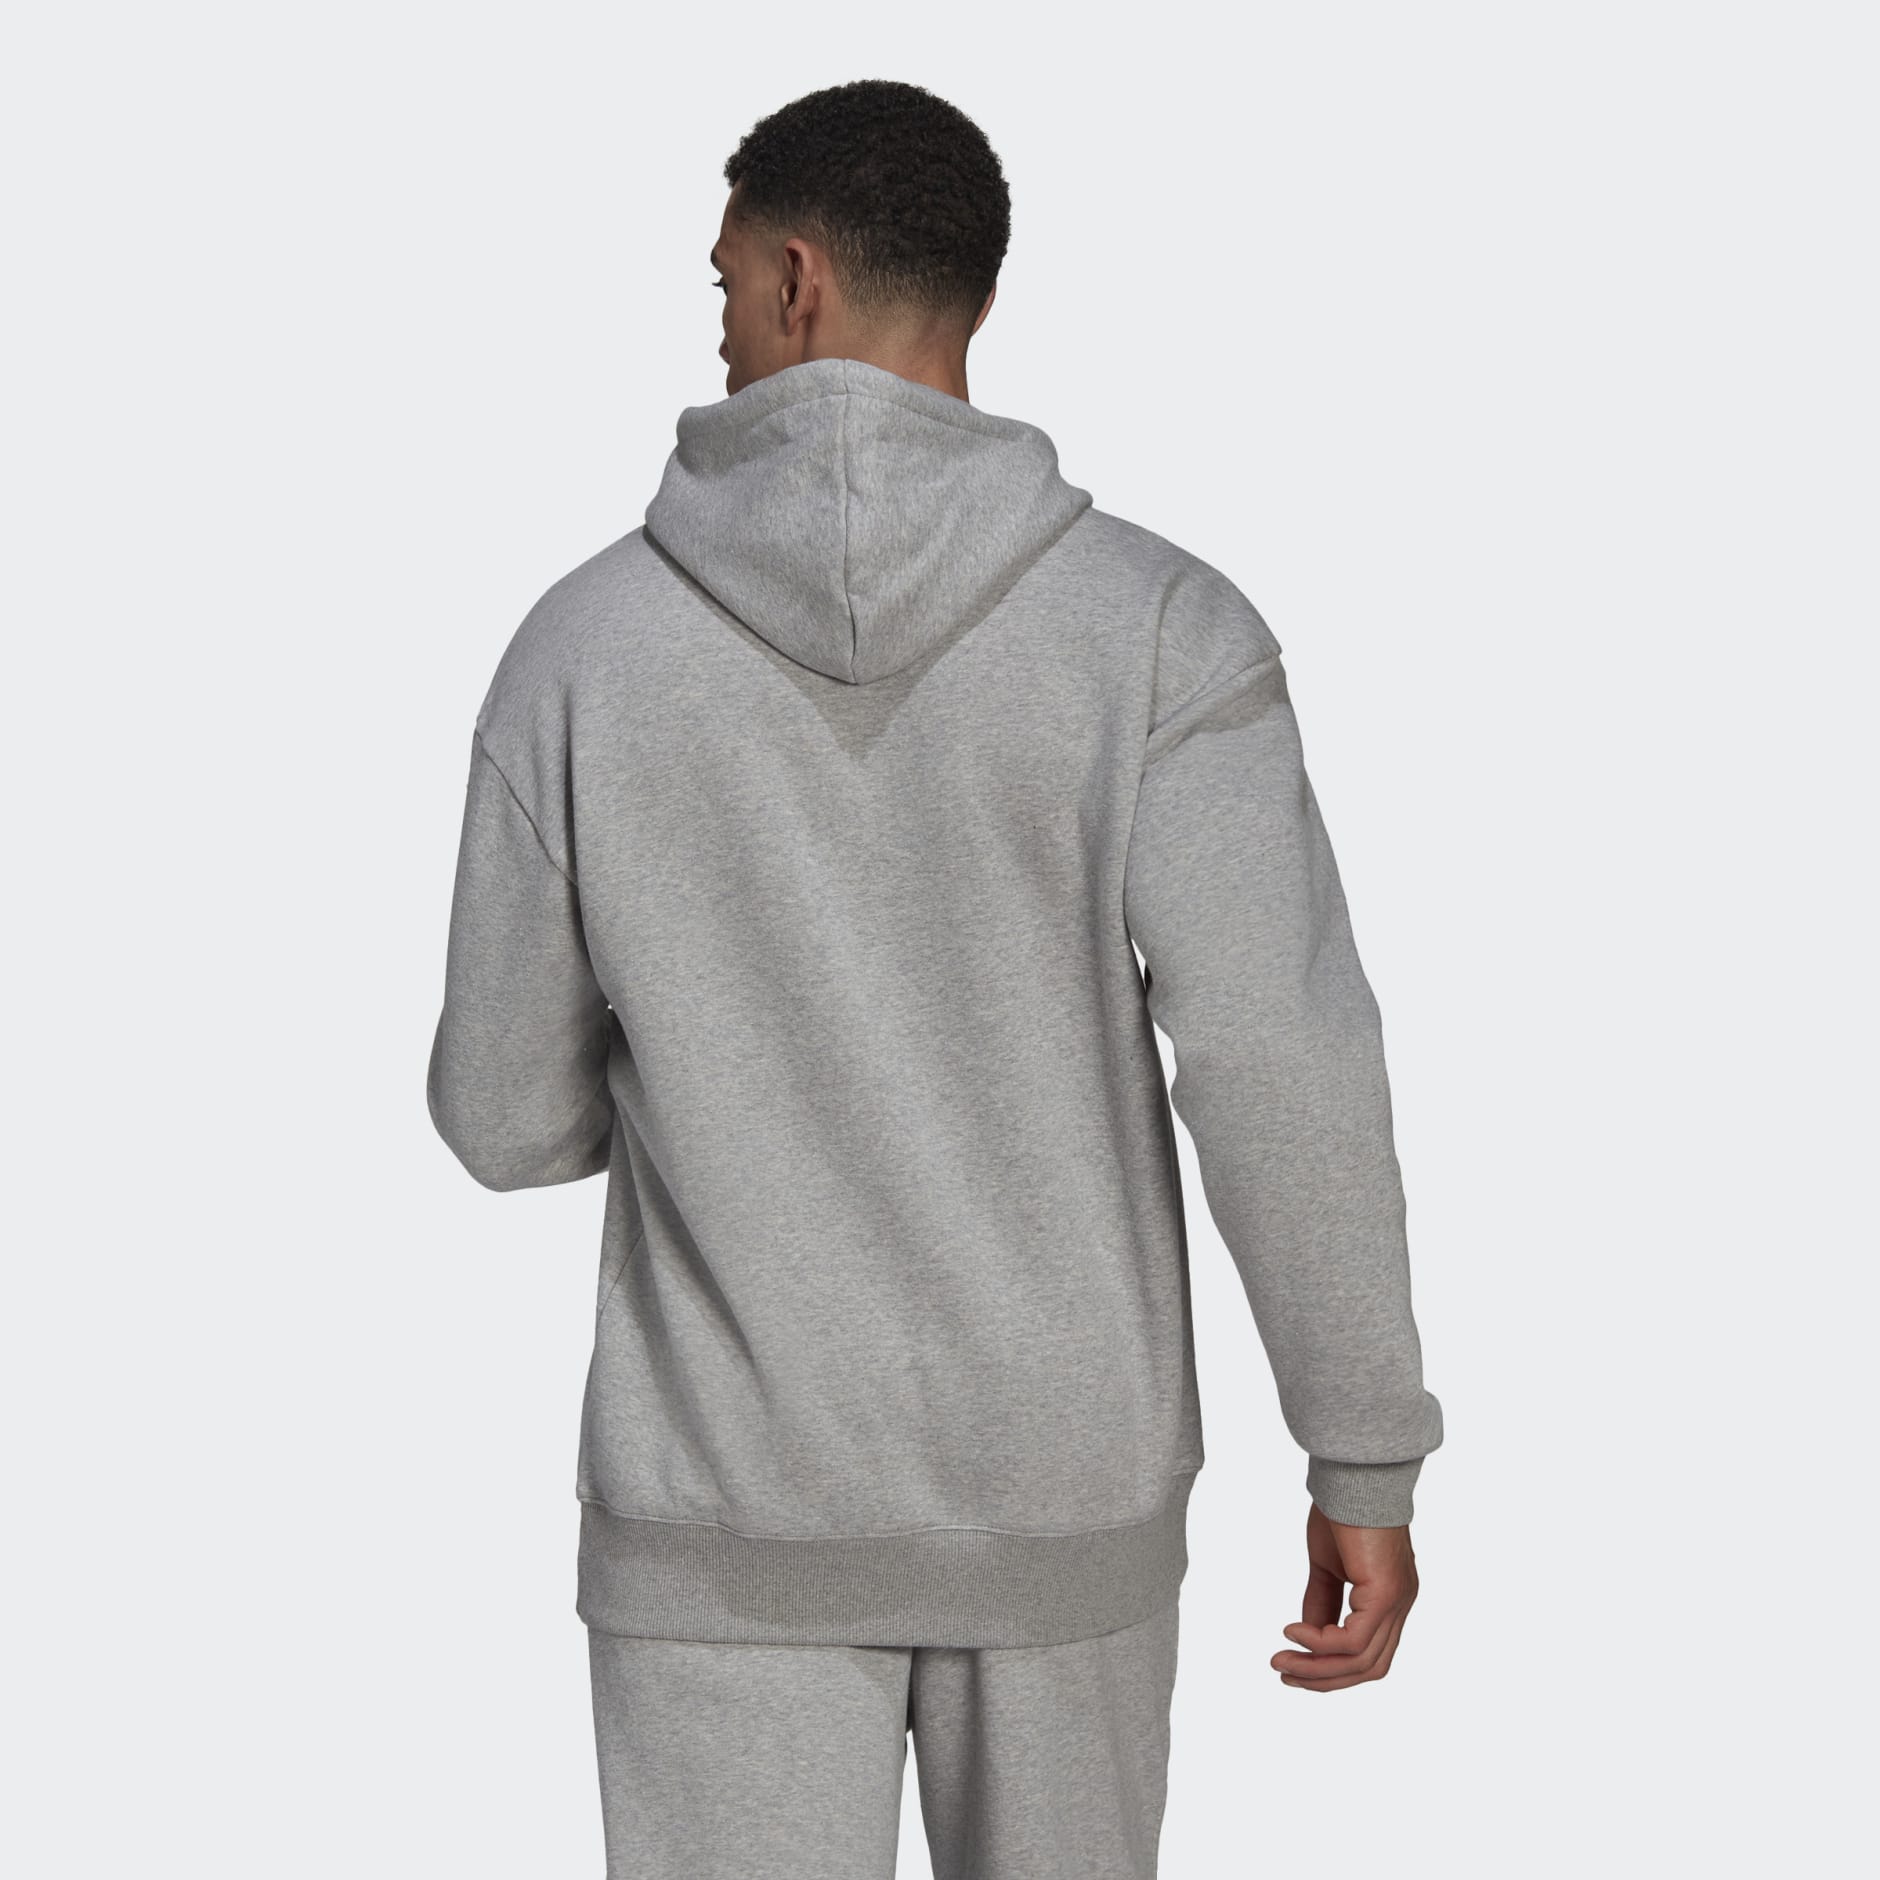 Eve I nåde af hende Men's Clothing - Essentials FeelVivid Cotton Fleece Drop Shoulder Hoodie -  Grey | adidas Bahrain